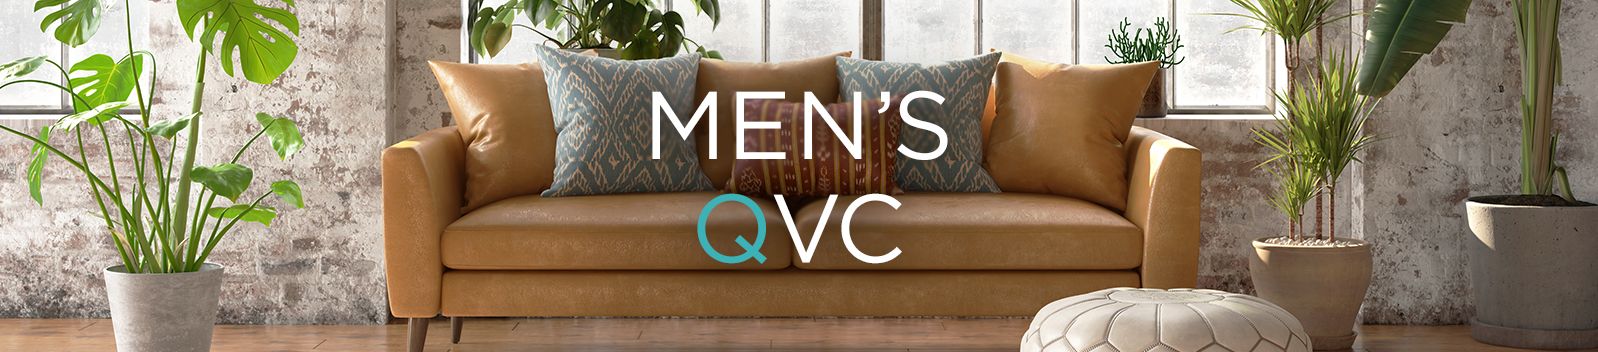 MEN'S QVC